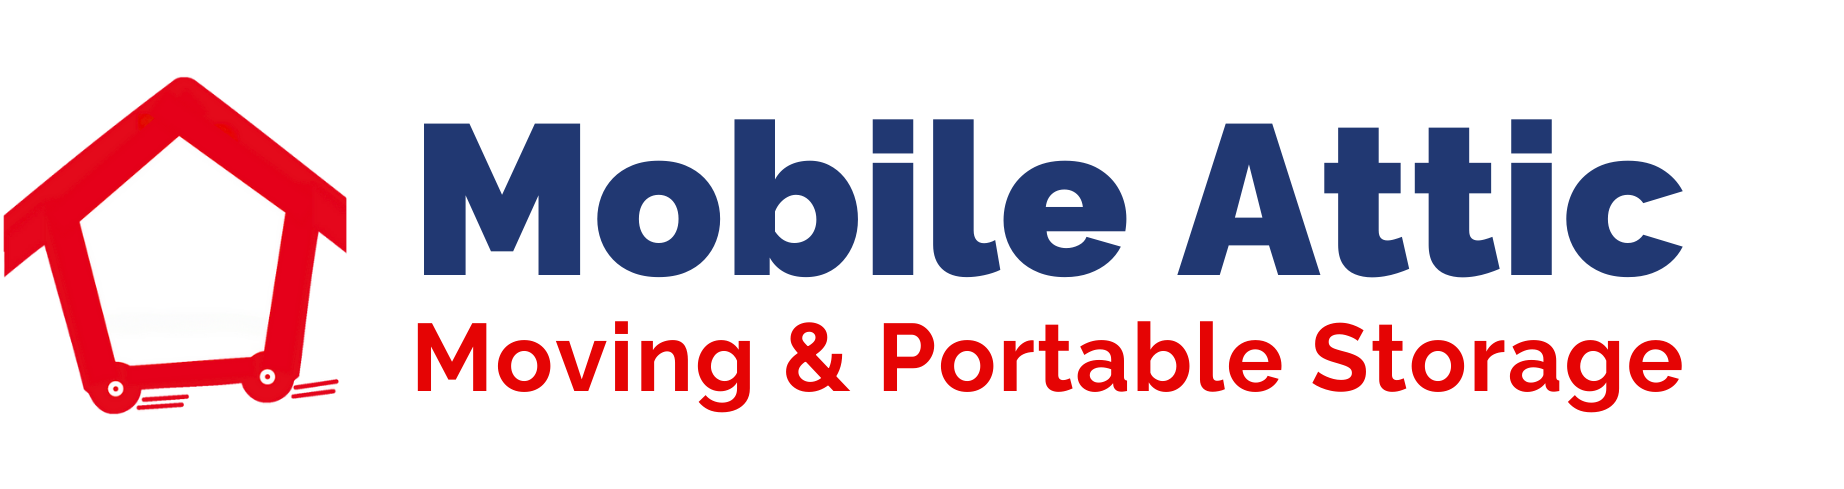 Mobile Attic New Blue Red Logo Bigger